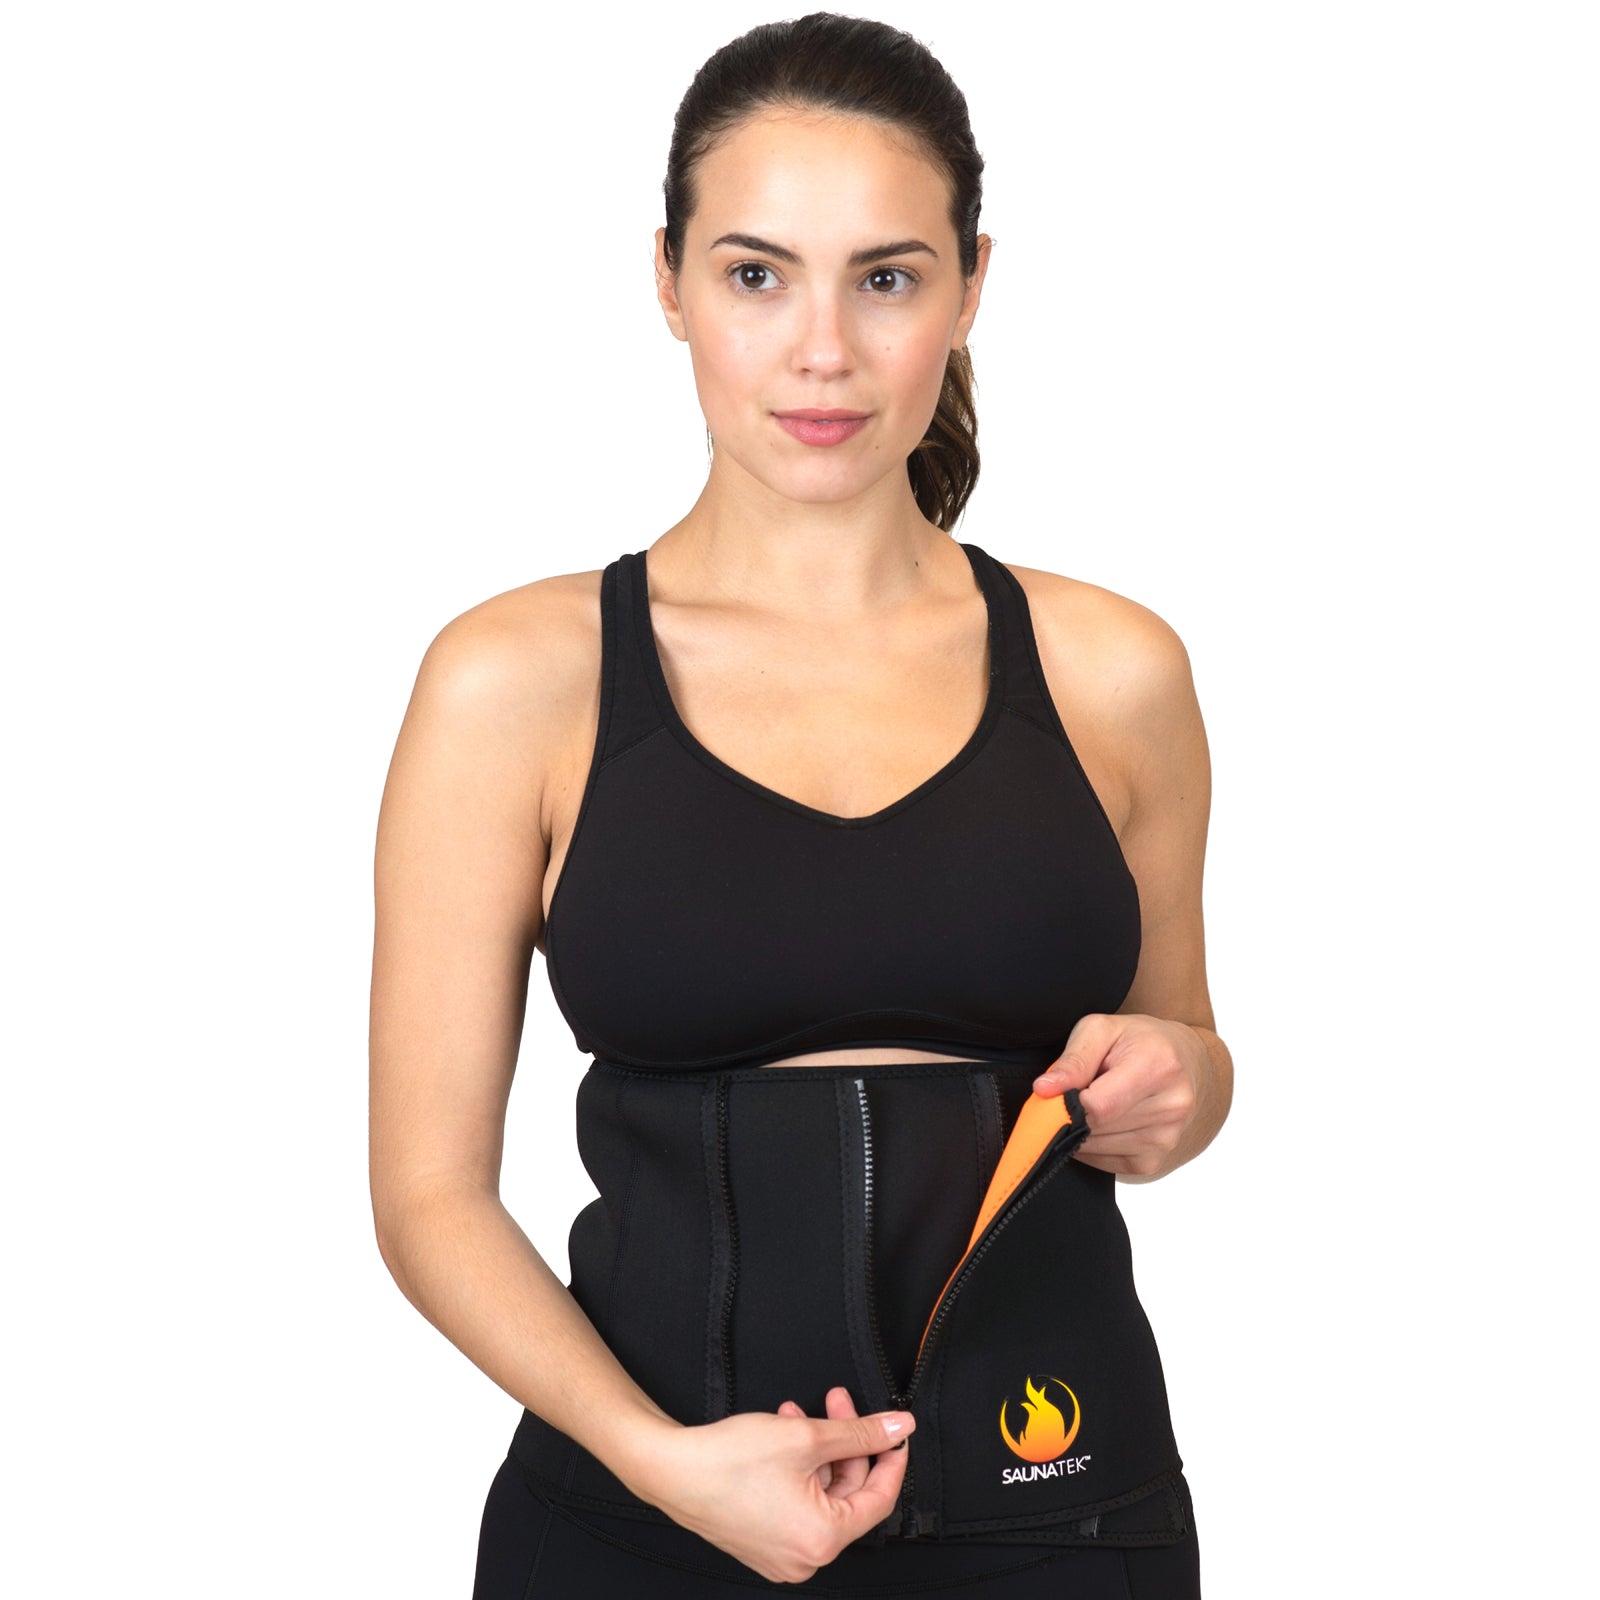 Body Glove Slimmer Belt, Weight Loss Sweat Belt, Workout Waist Trainer,  Slimming Stomach Wrap Belt For Home or Gym Men & Women (12) - ShopStyle